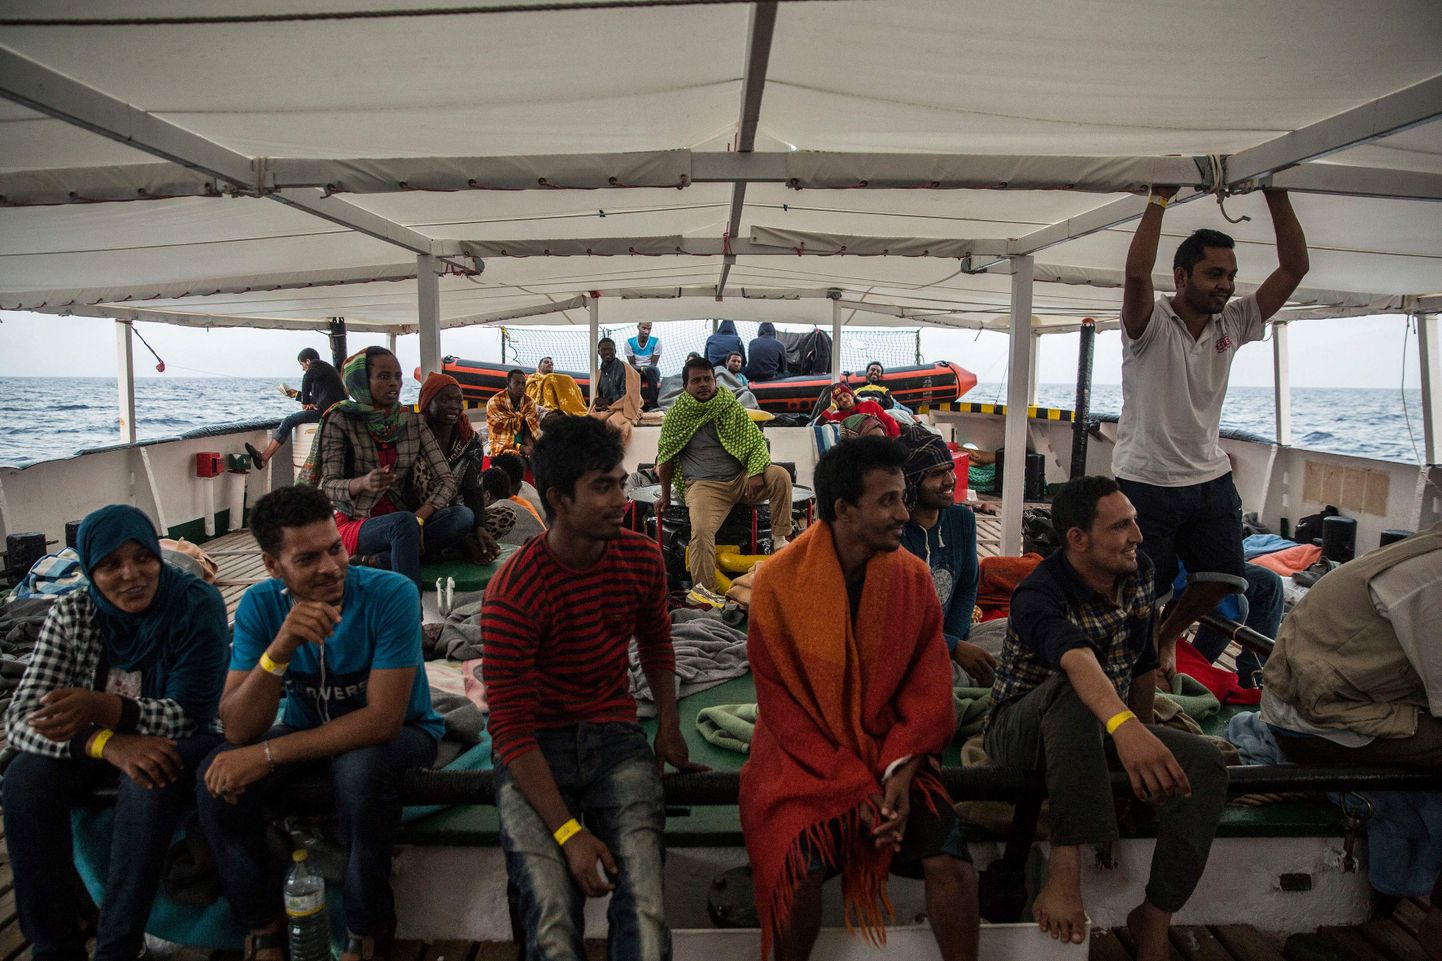 Migrandid abiorganisatsiooni Proactiva Open Arms laeva pardal.